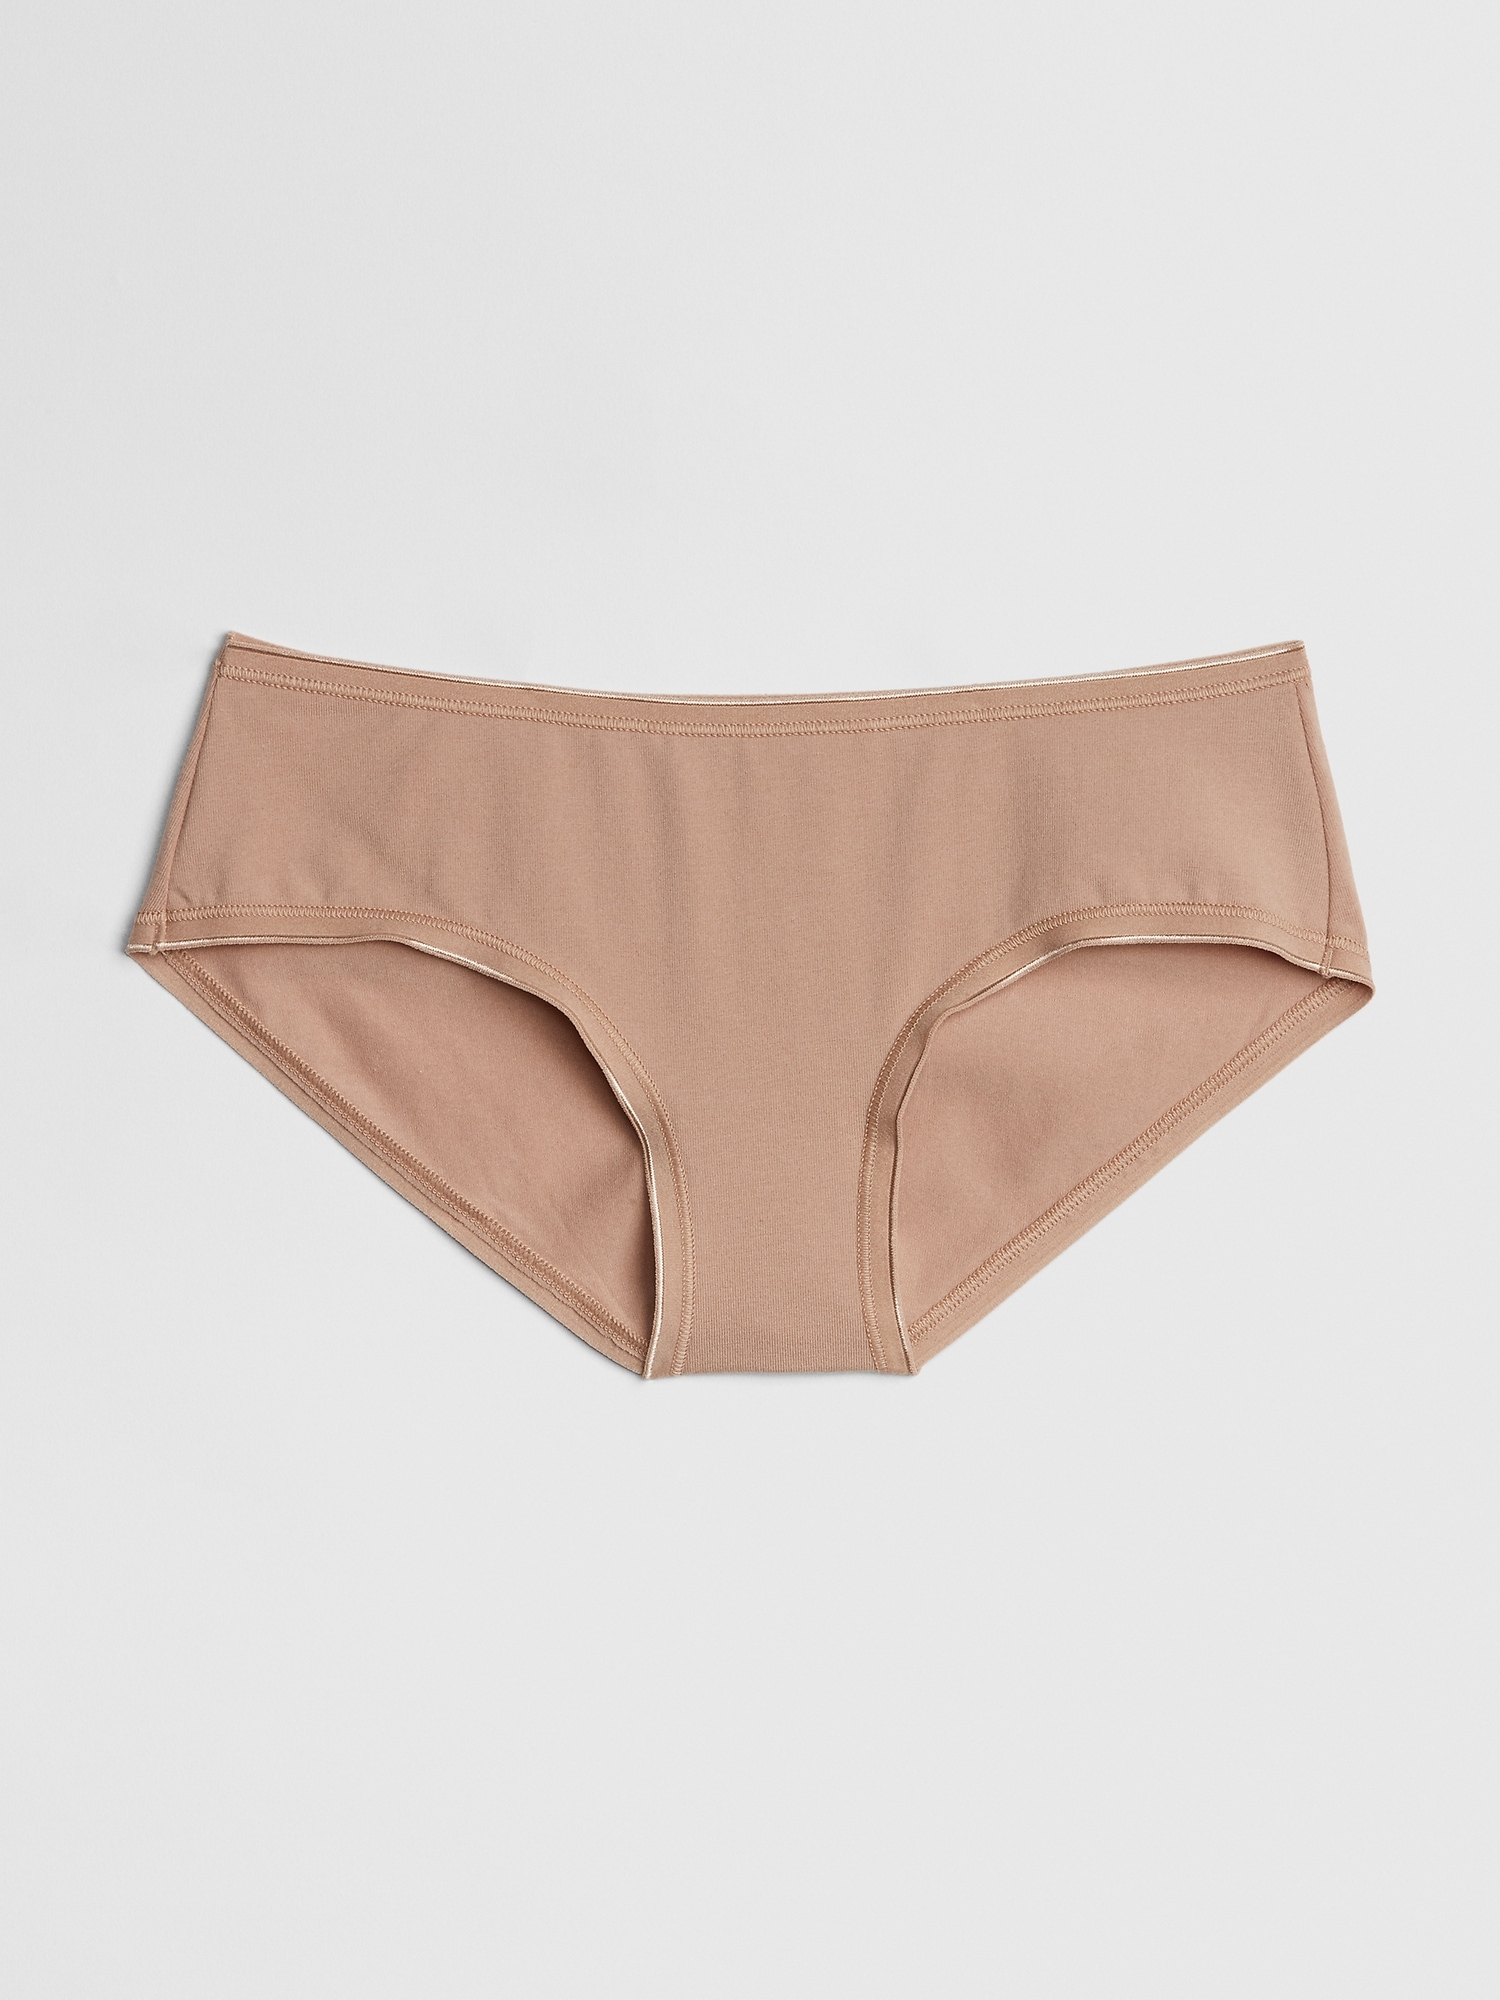 Buy DISOLVE Women's Underwear Soft Cotton Hipster Panties